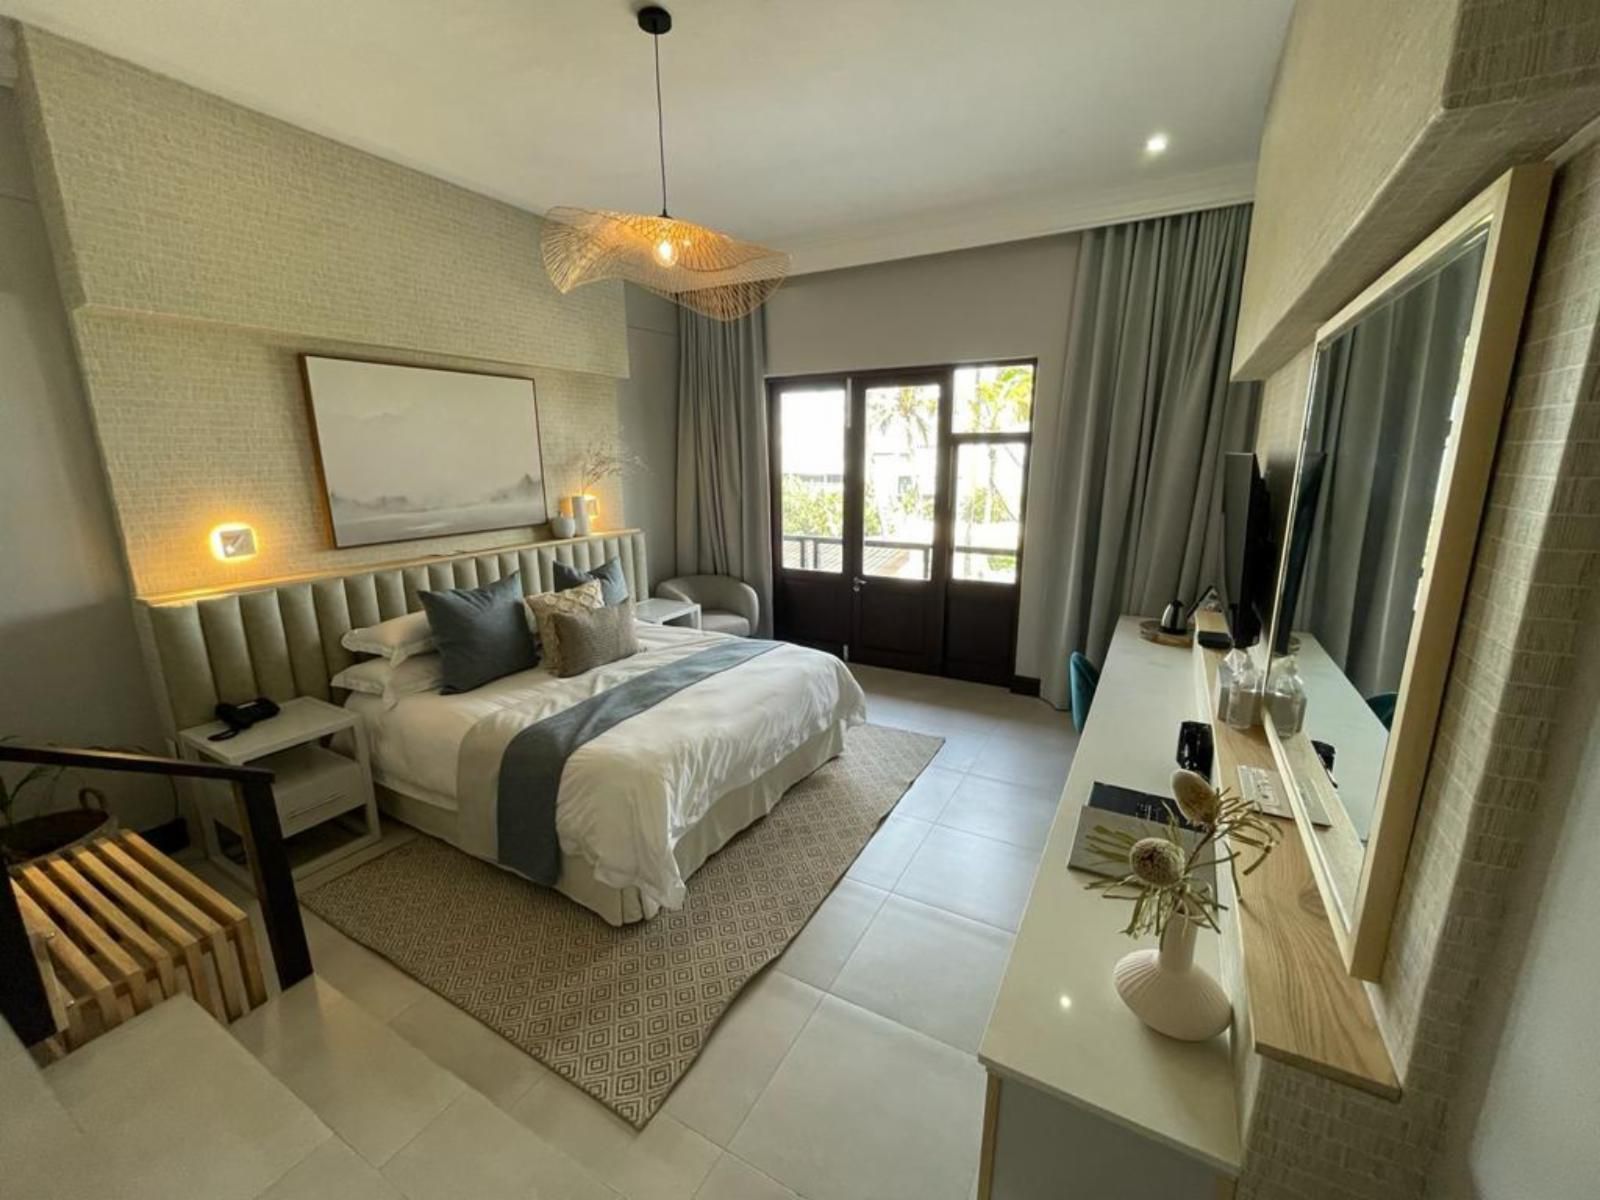 Coco De Mer Boutique Hotel Ballito Kwazulu Natal South Africa Bedroom